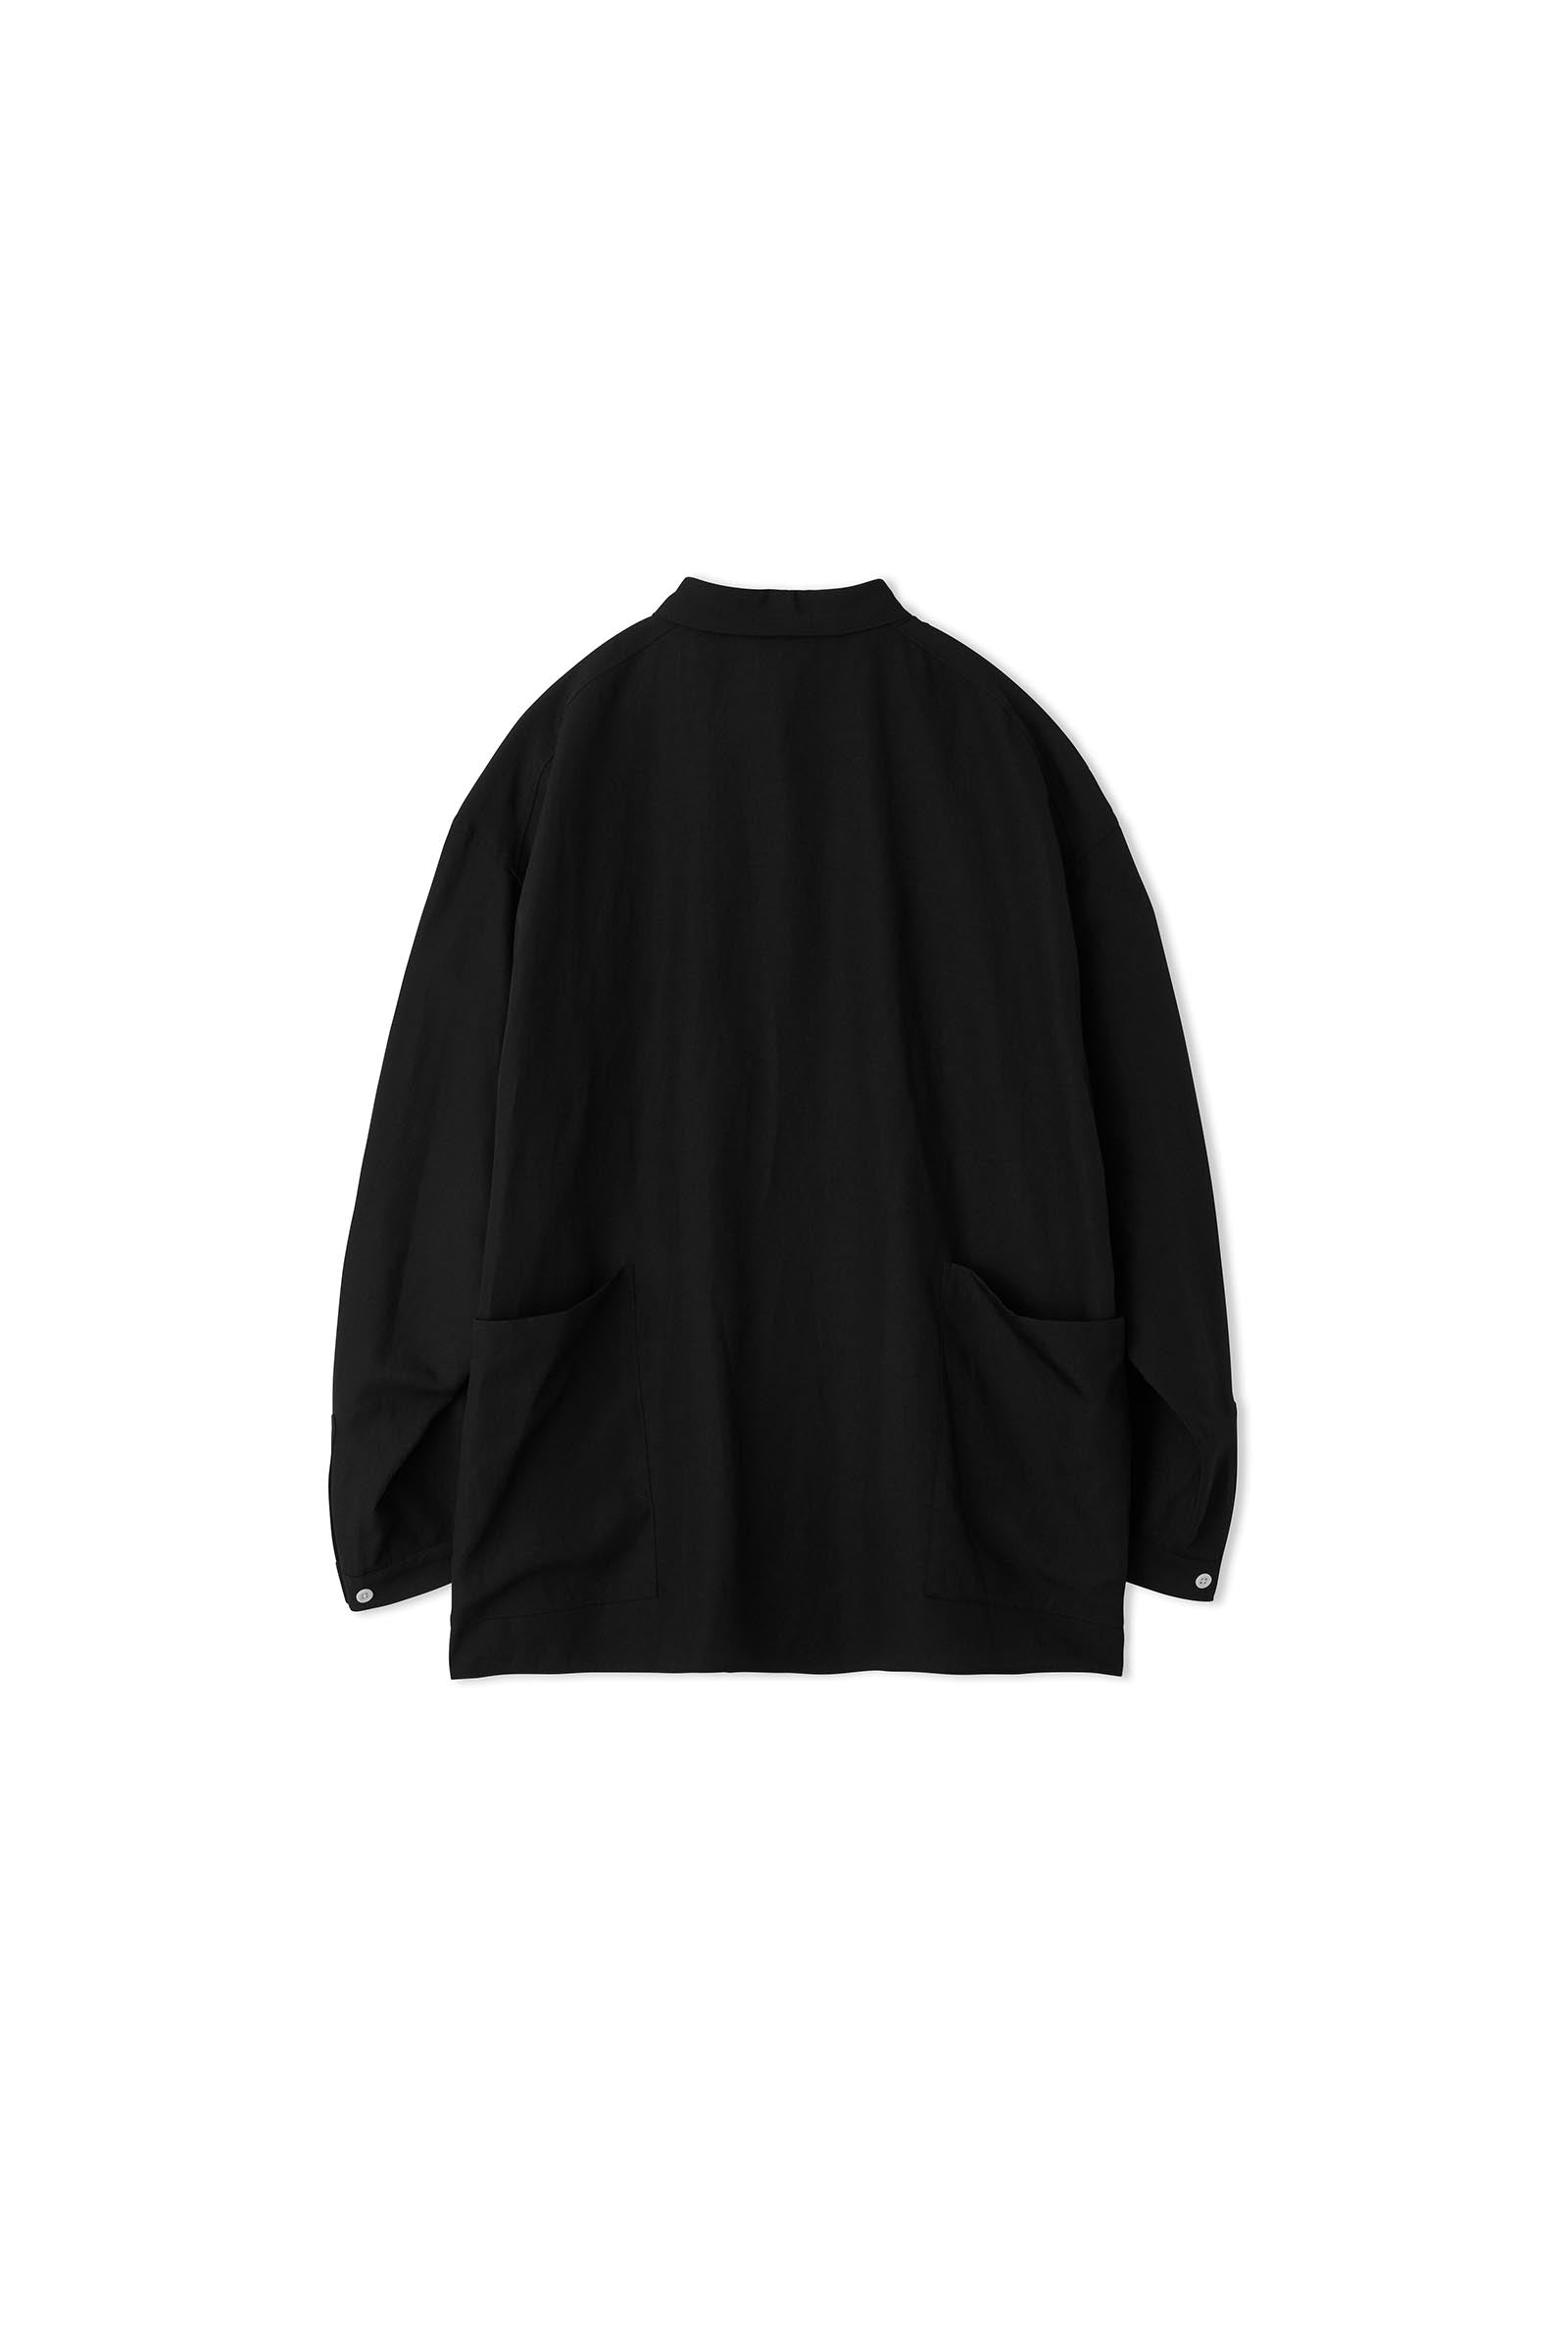 DIGAWEL / Side pocket L/S shirt②